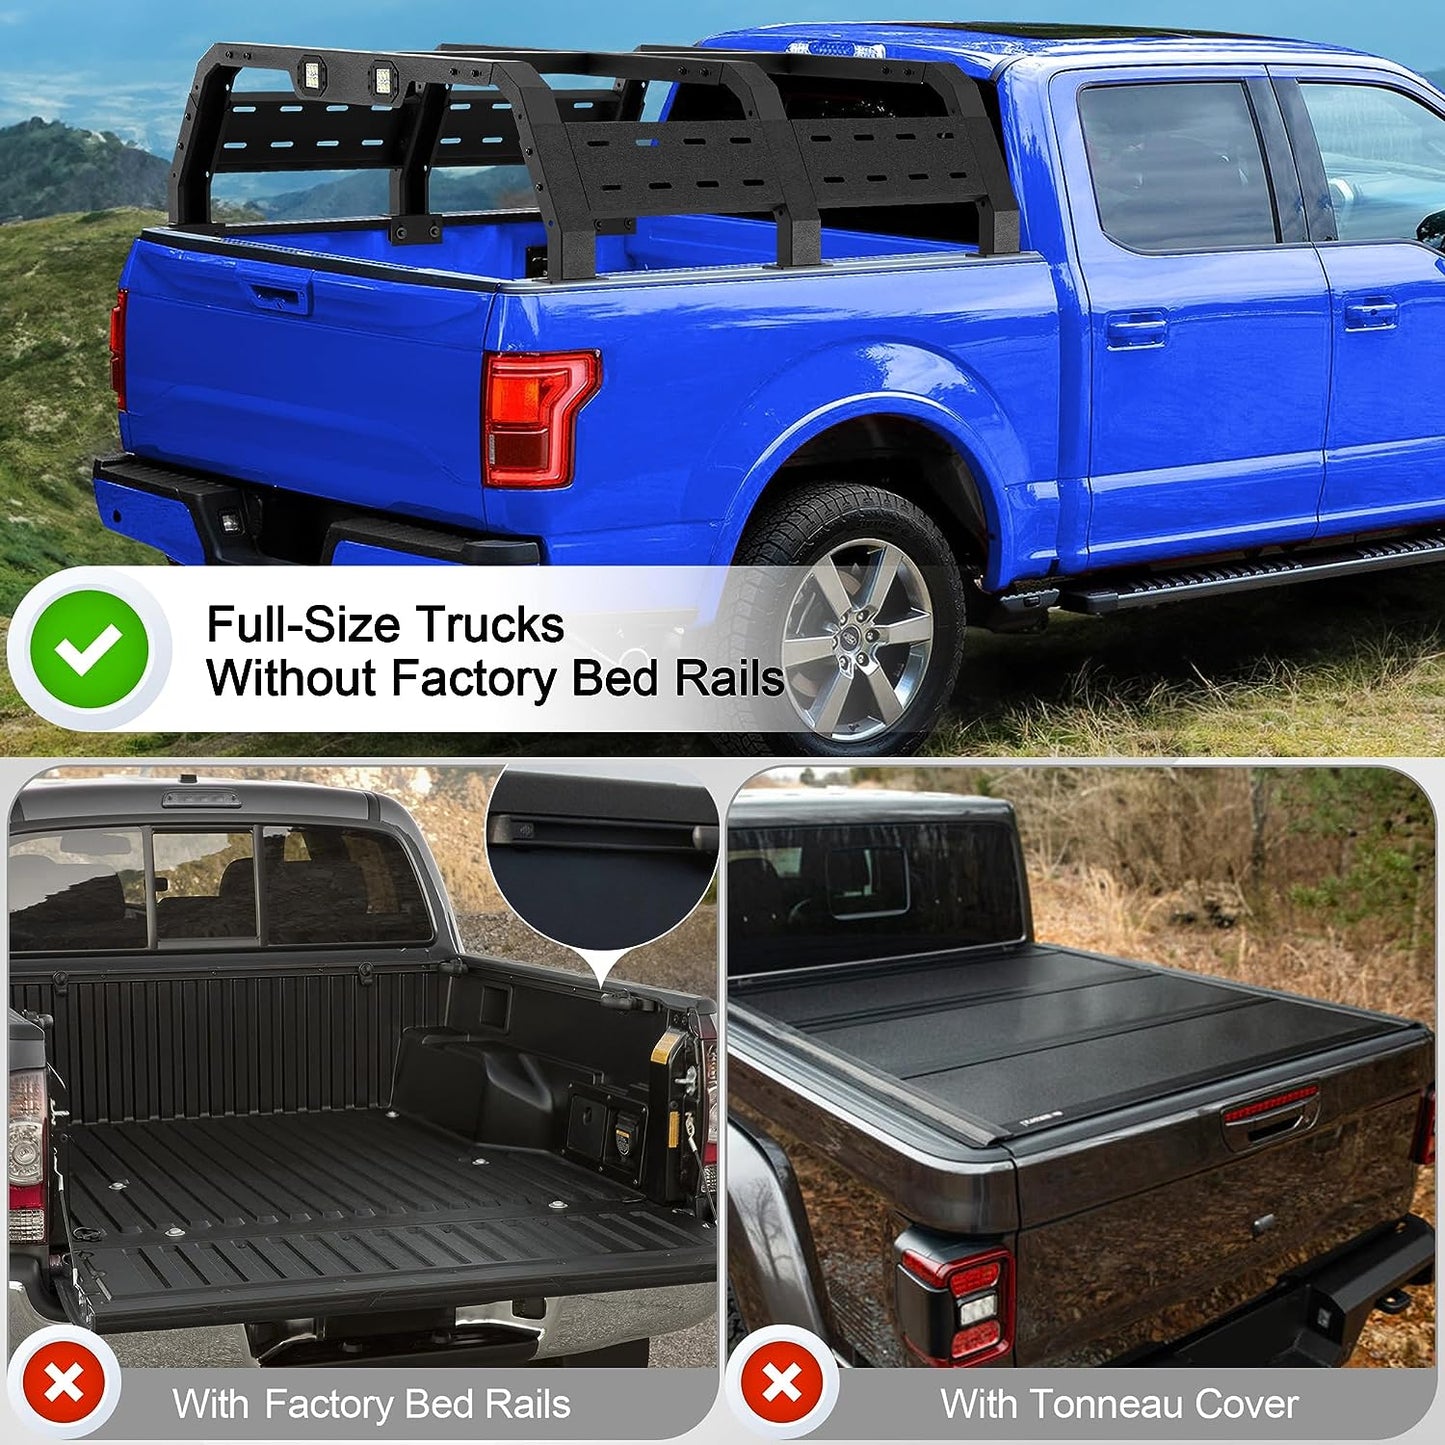 Truck Bed Rack No-Drill Cargo Rack for Dodge Ram 1500,Silverado 1500,Ford F150,Toyota Tundra